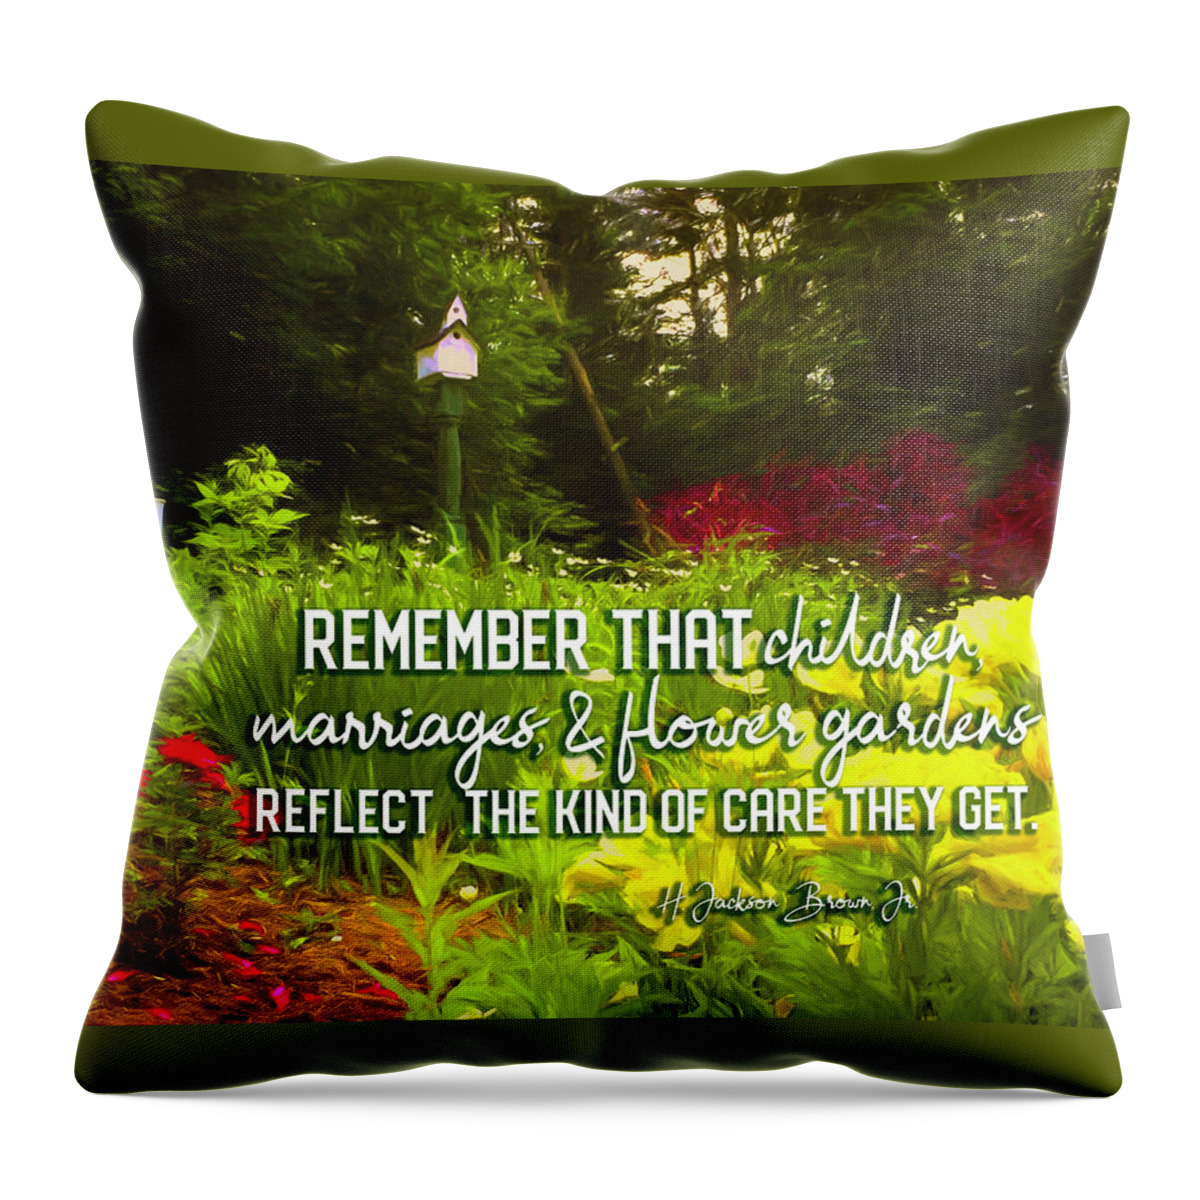 Flower Throw Pillow featuring the digital art Flower Garden Quote by Barry Wills